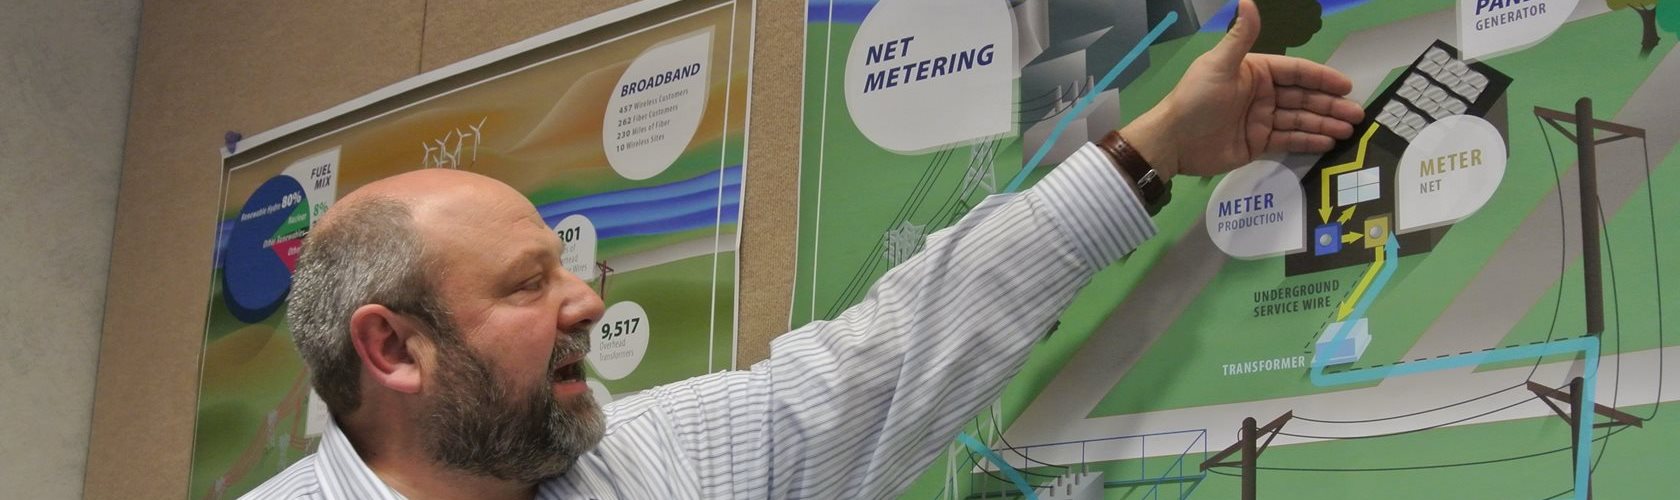 Photograph of Benton PUD employee giving presentation on net metering.